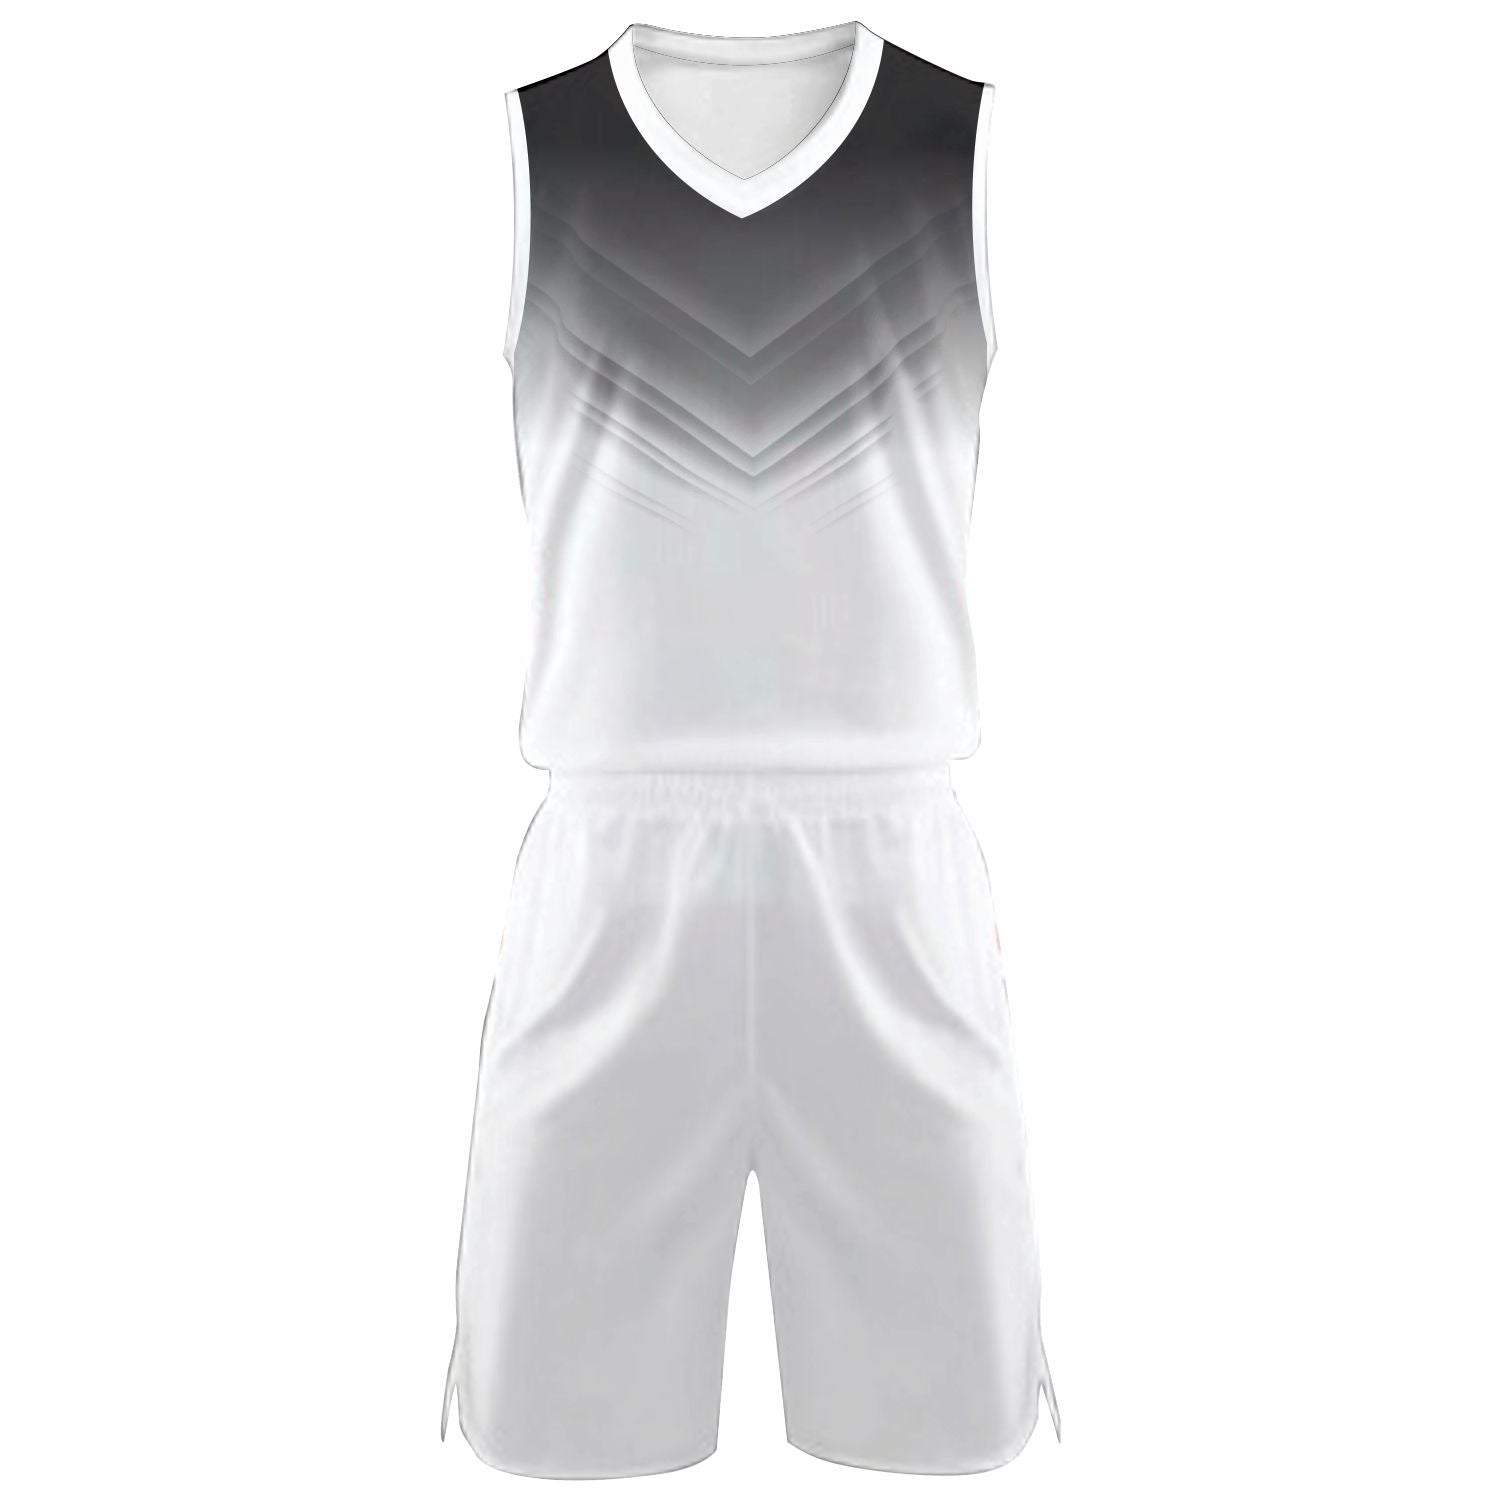 Elite Transformer 2 Basketball Uniform